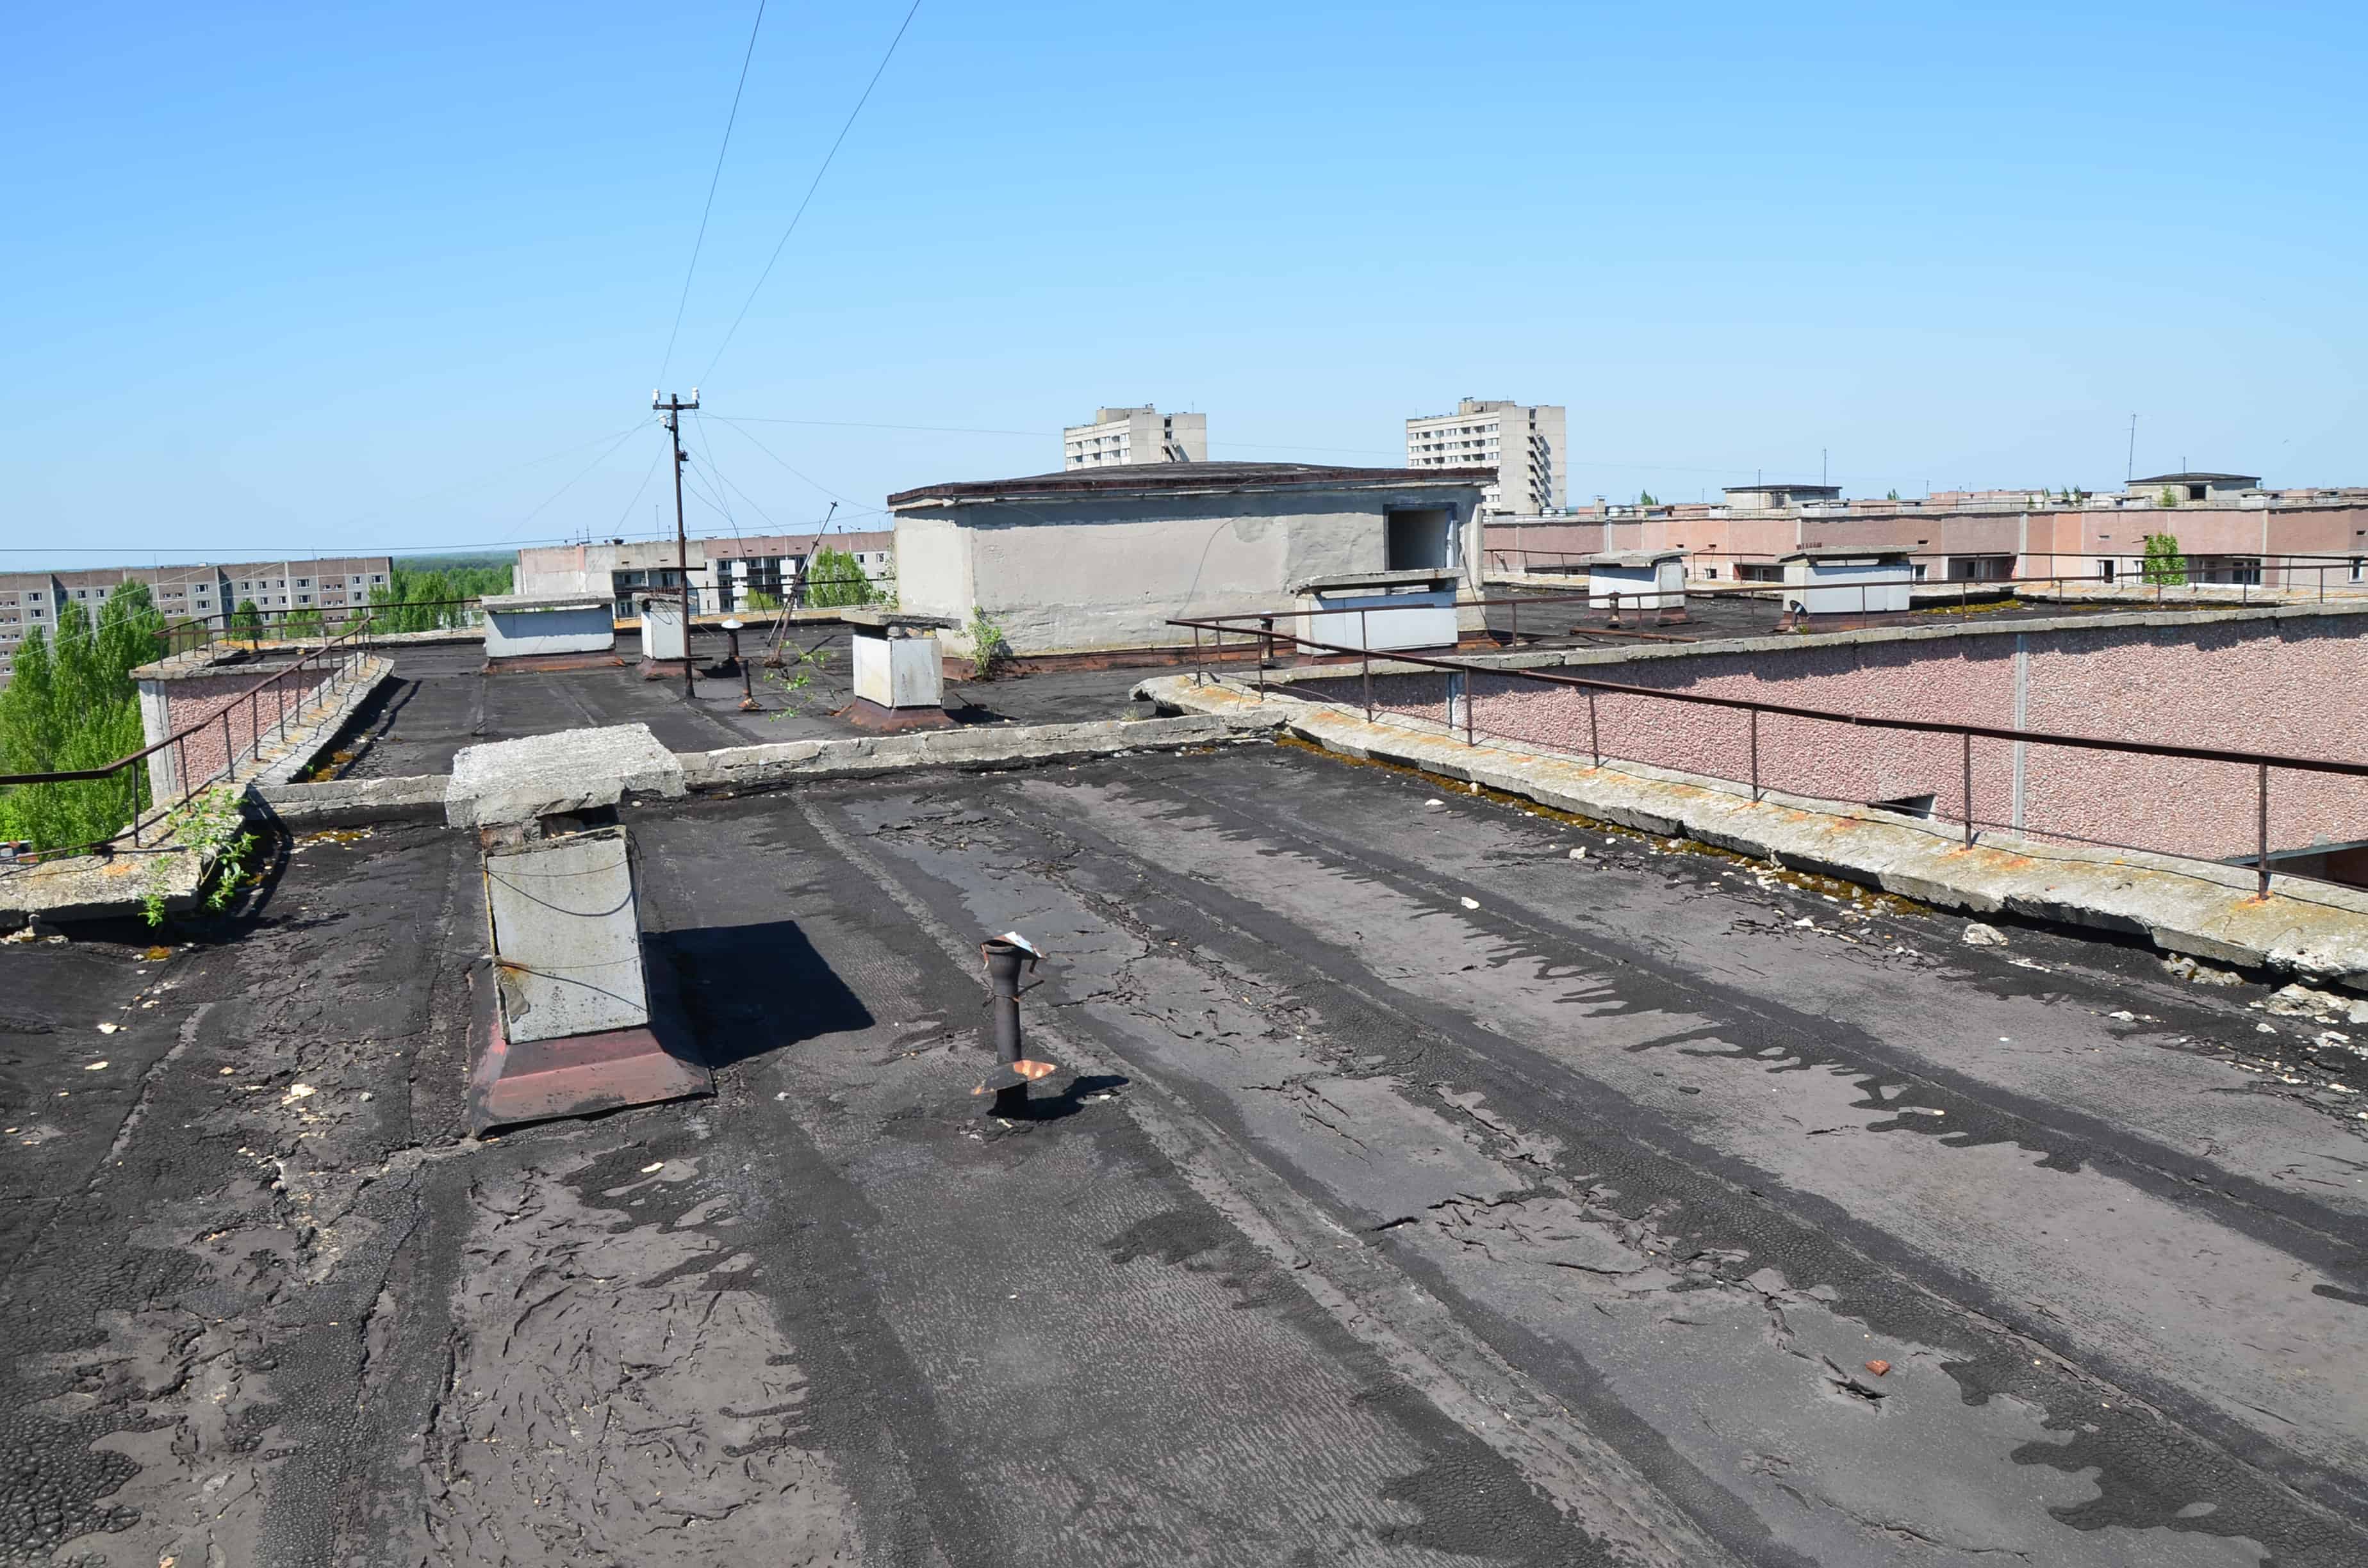 Rooftop of 17 Sportivnaya Street in Pripyat, Chernobyl Exclusion Zone, Ukraine